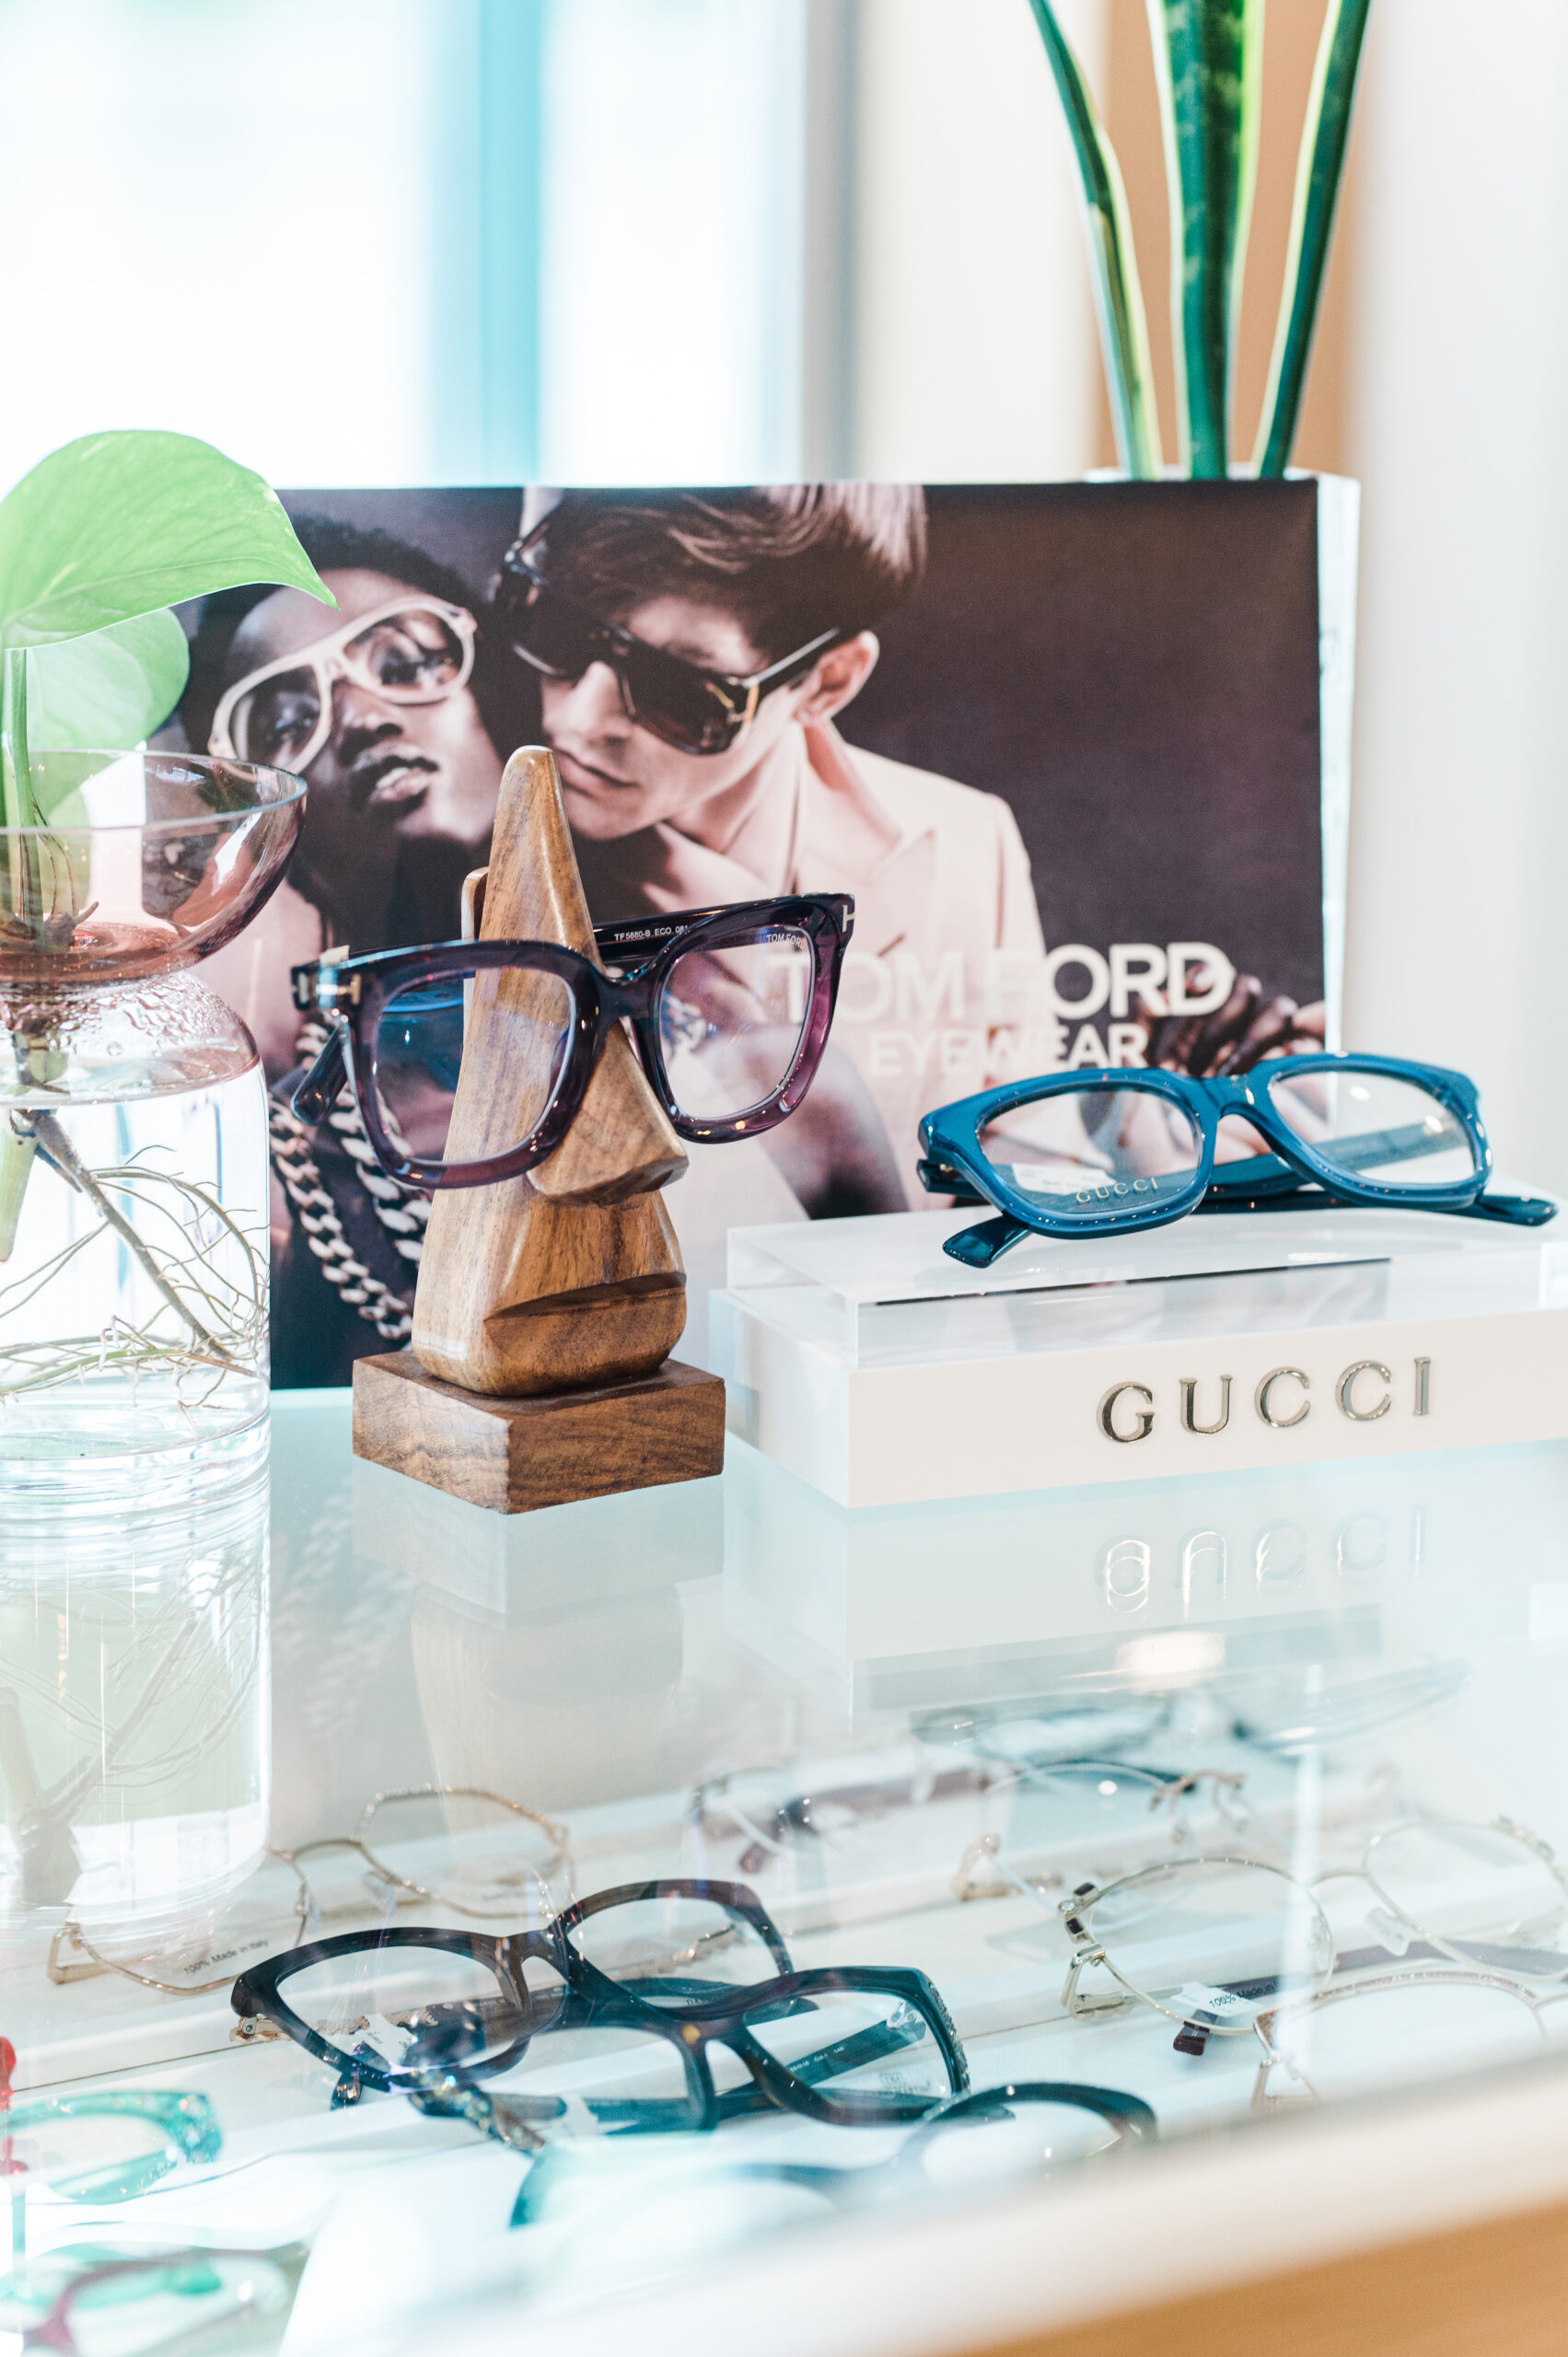 Gucci glasses on display at a Kamloops eye clinic